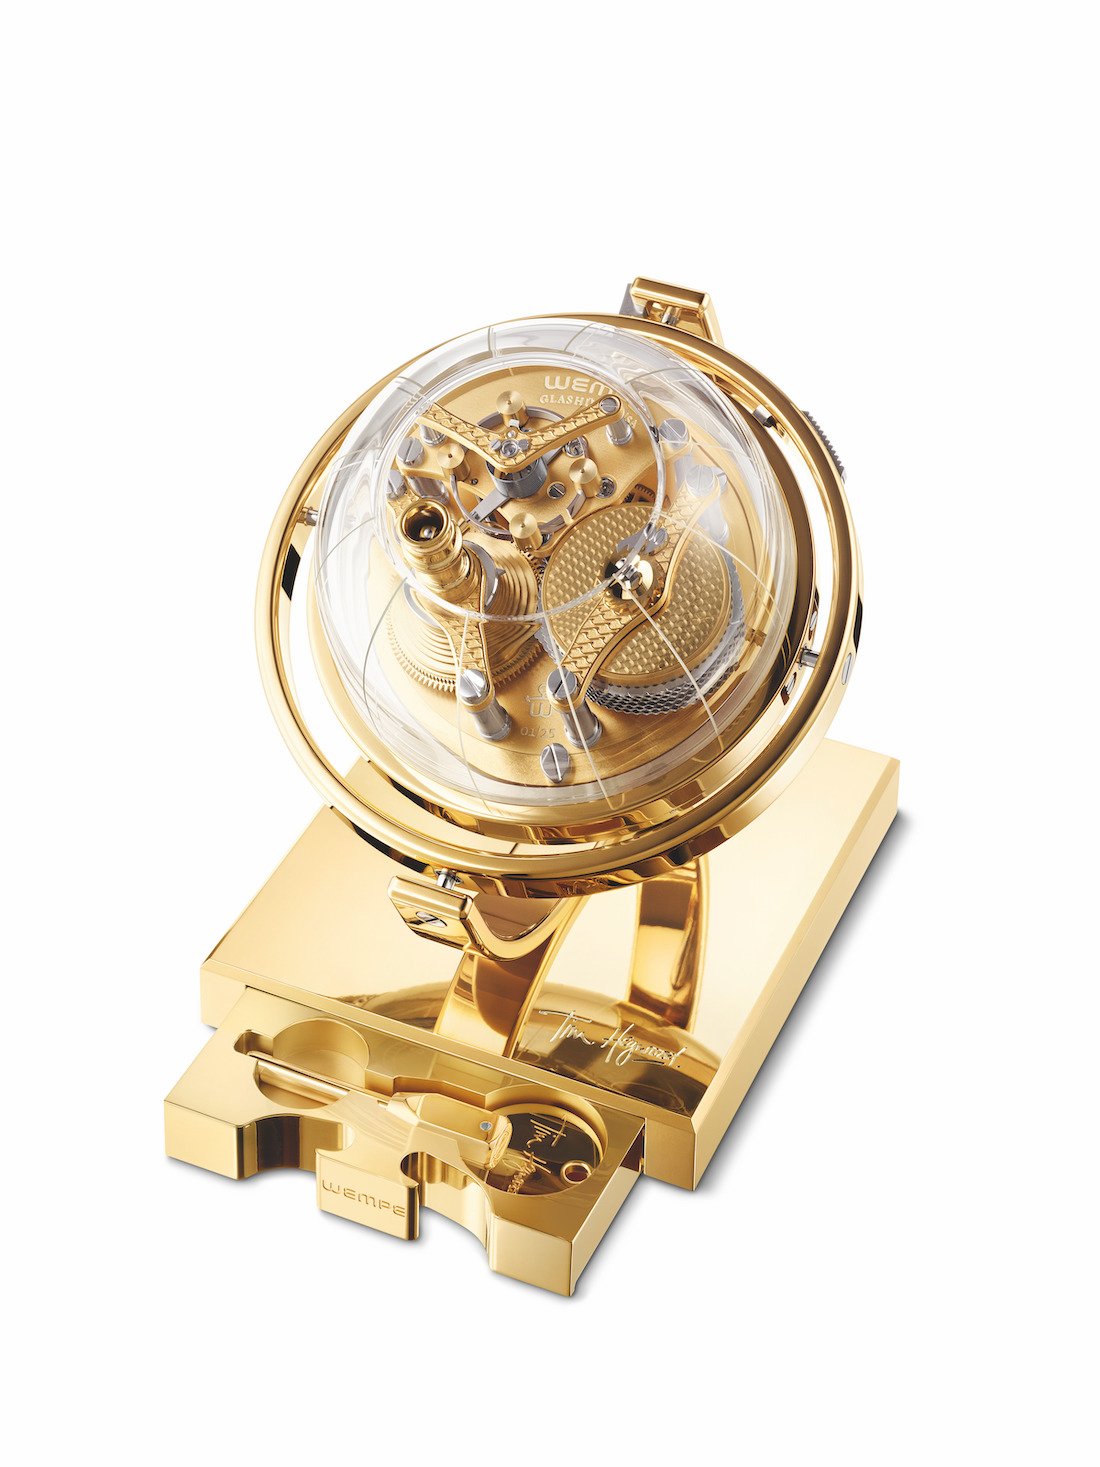 Wempe Marine Chronometer by Tim Heywood_CW800018_CW800019_PR-5.jpg